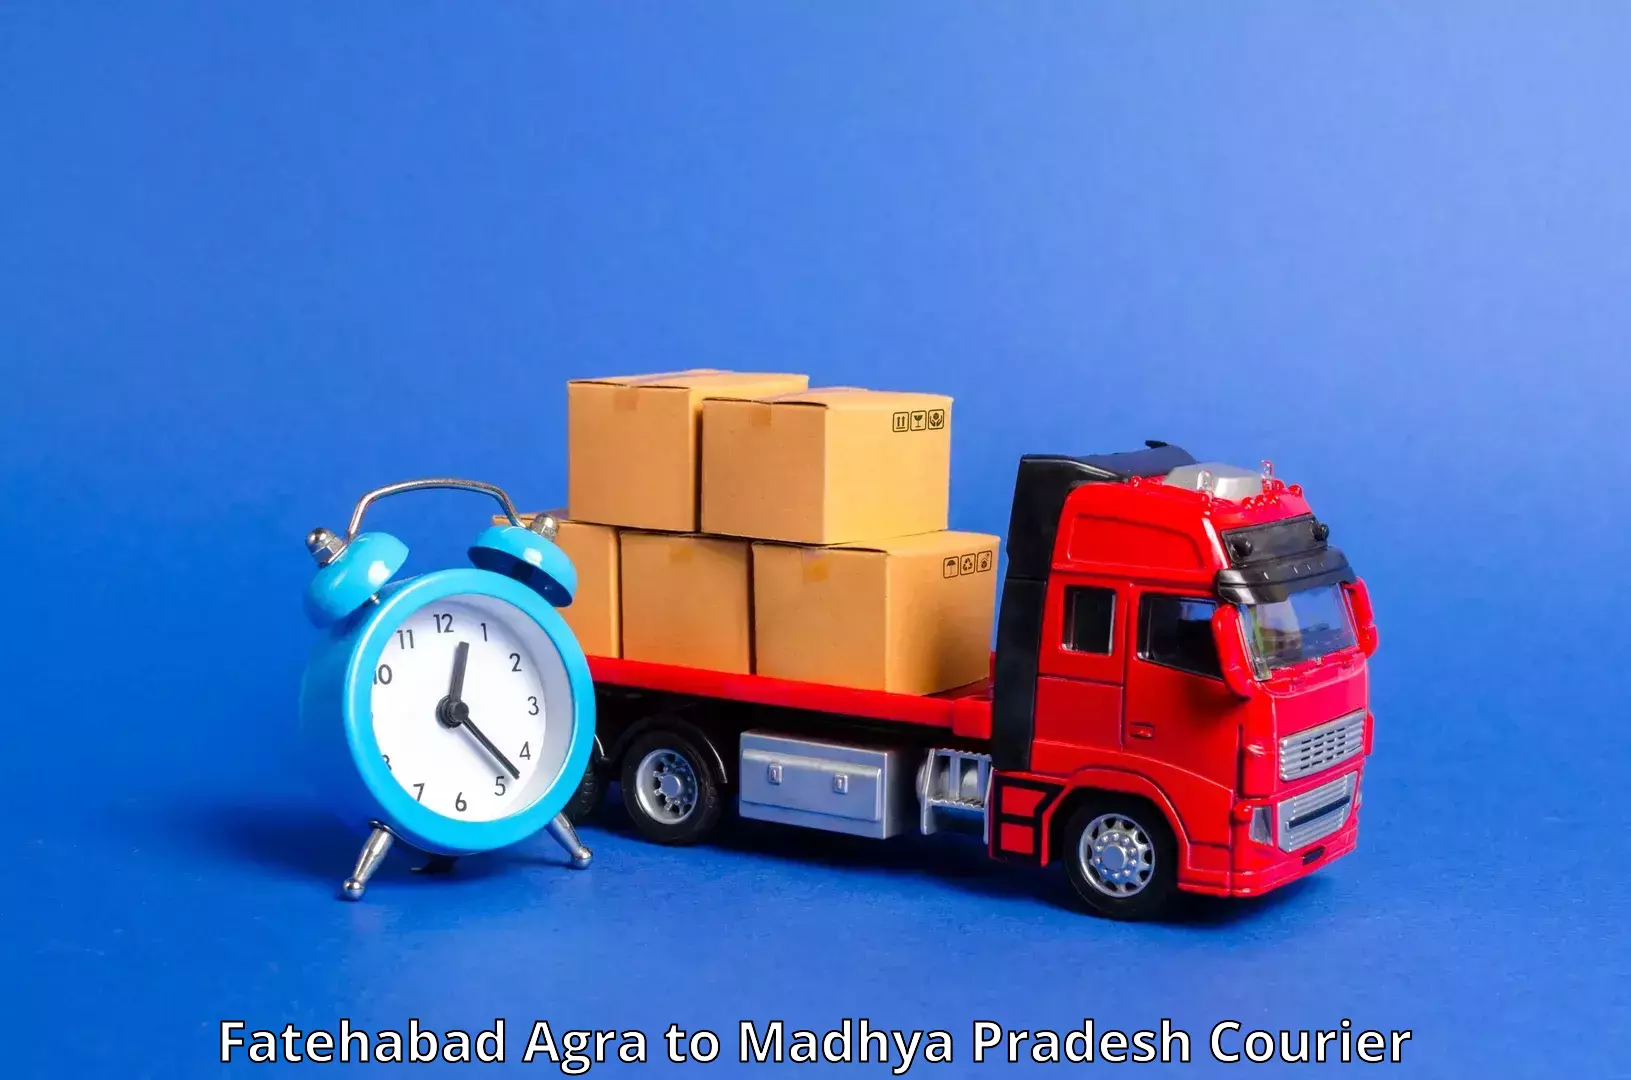 Global courier networks Fatehabad Agra to Gadarwara